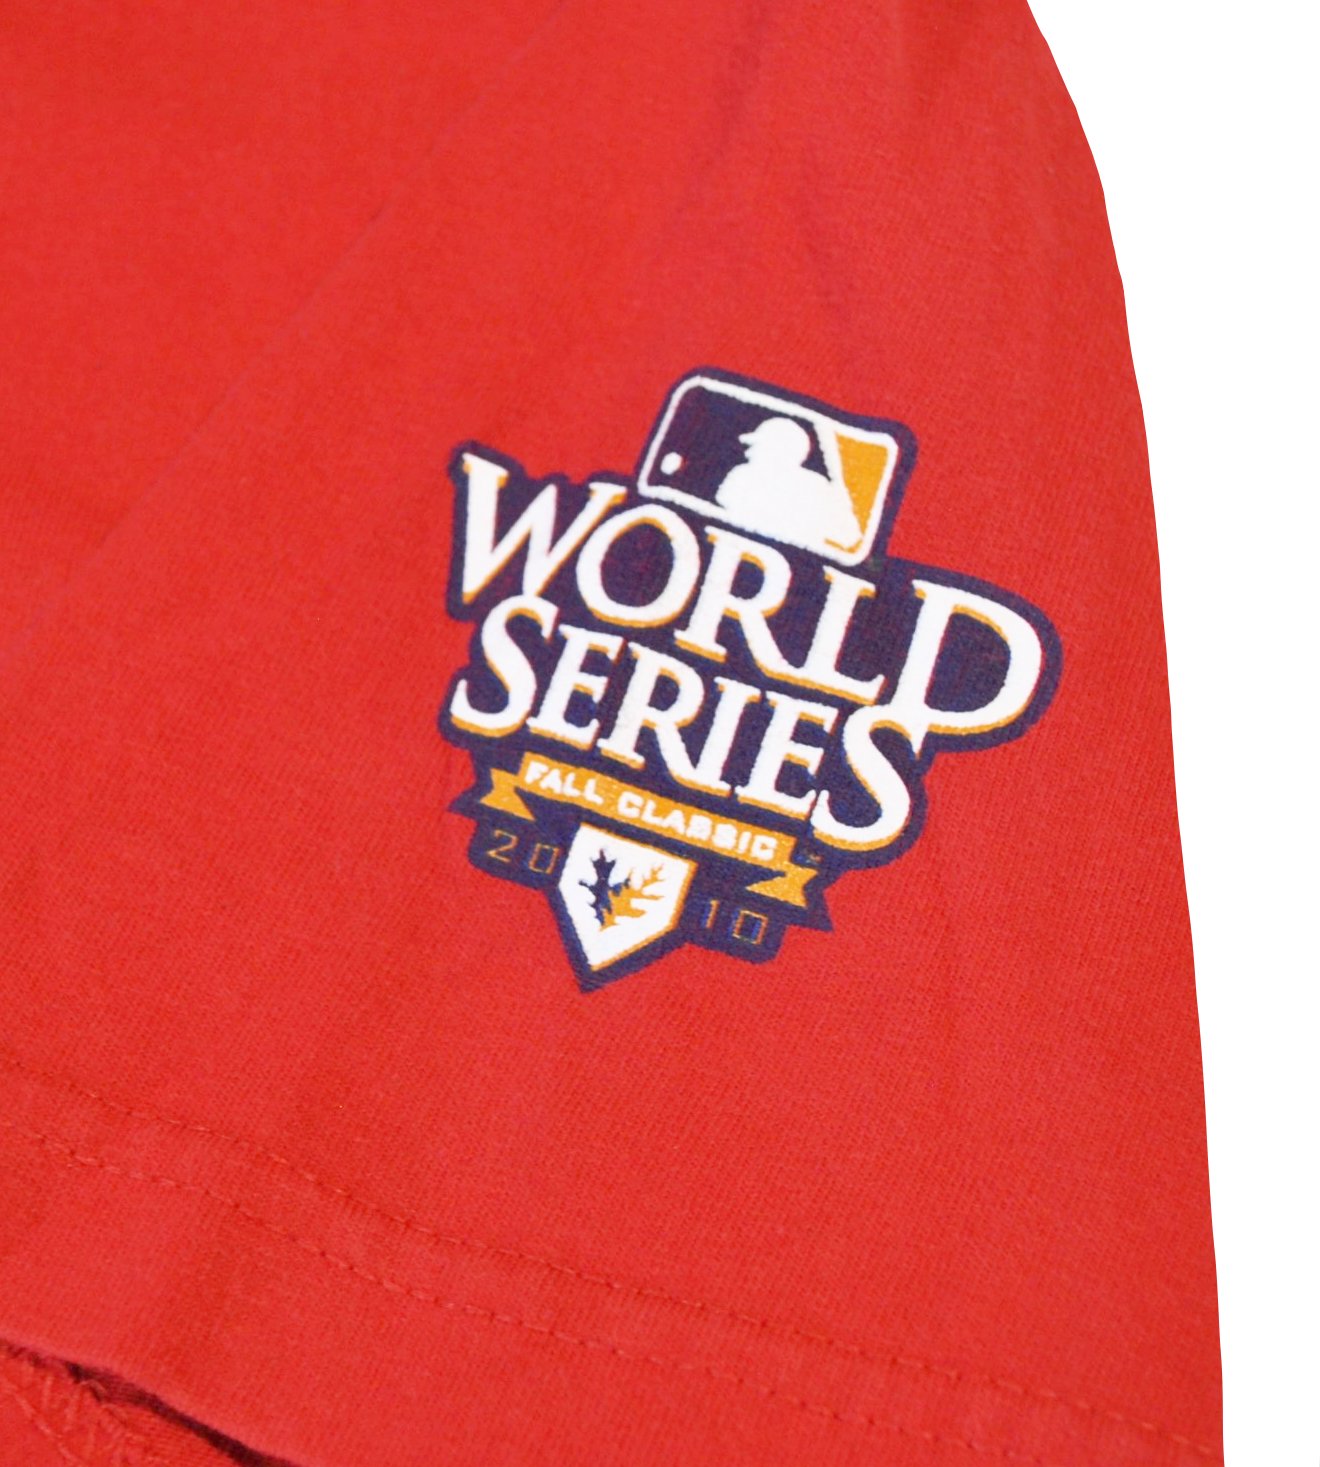 World Series Texas Rangers MLB Jerseys for sale